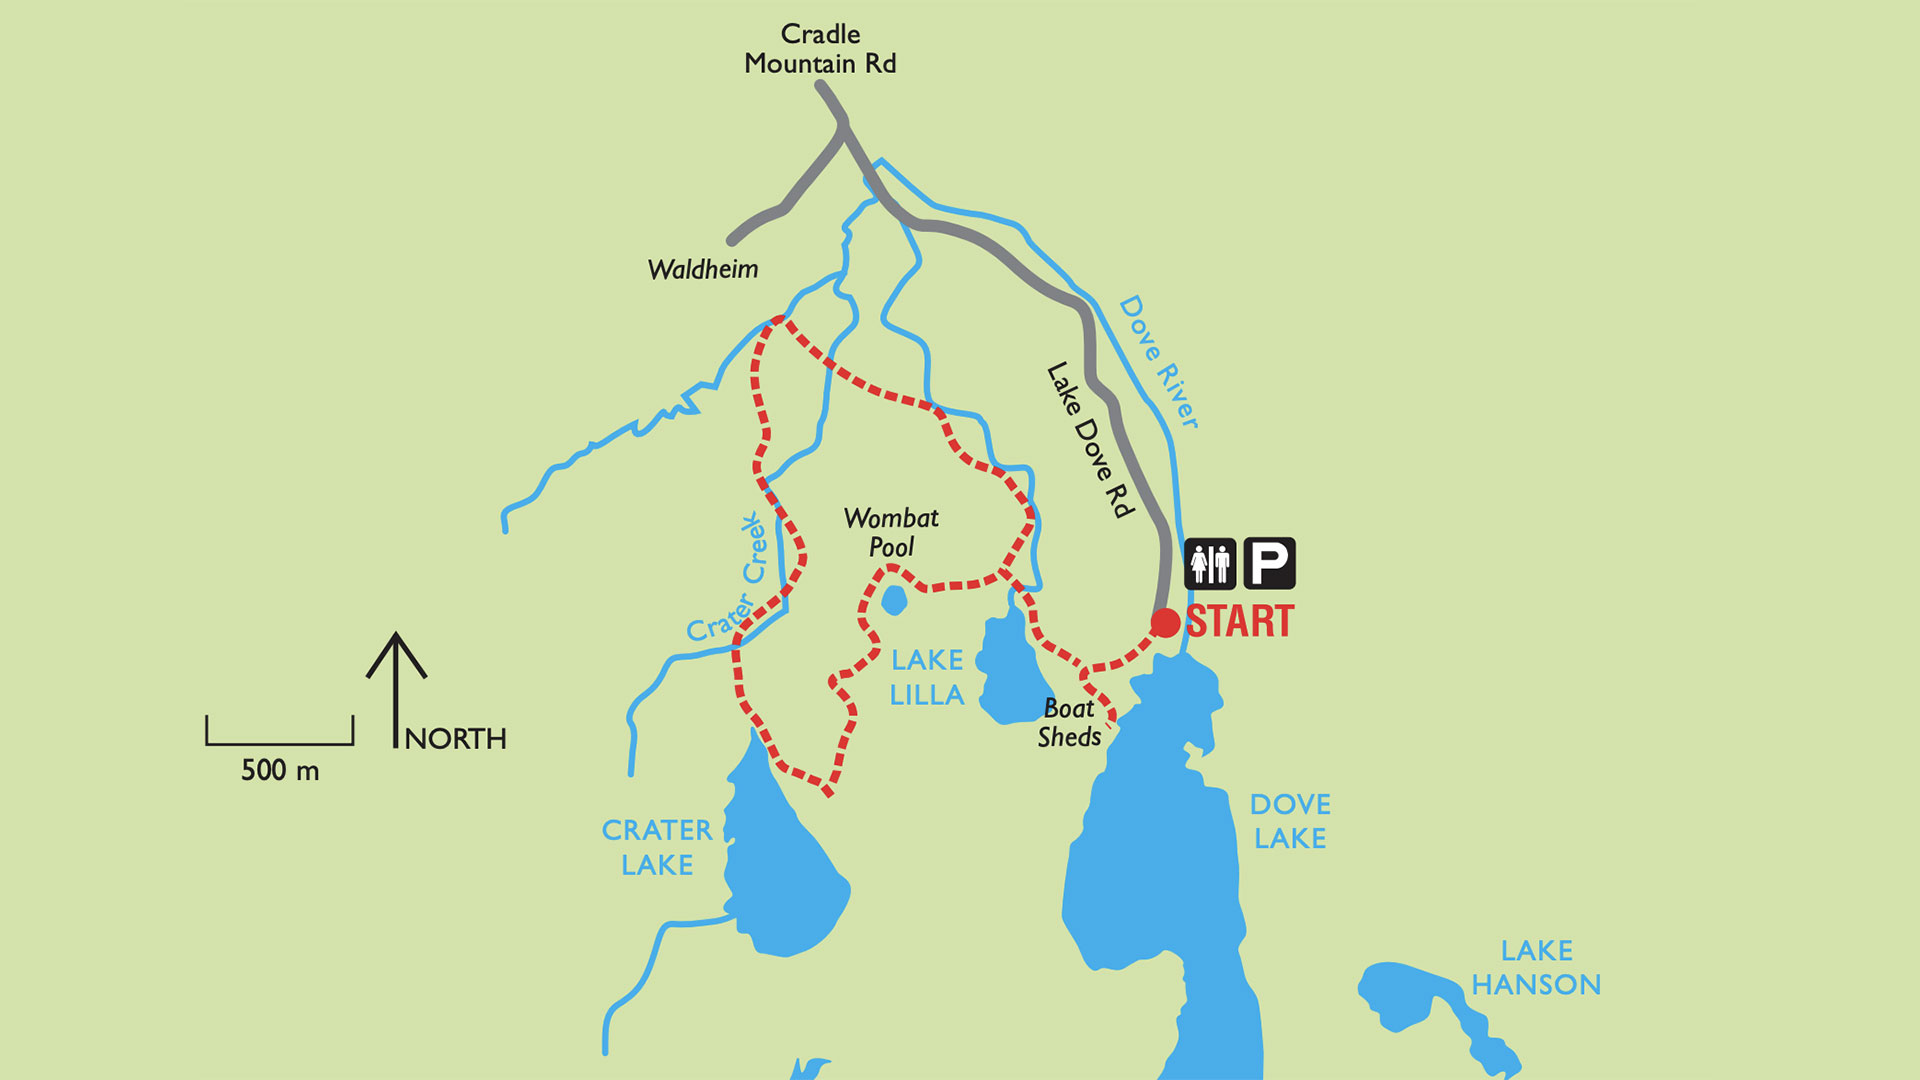 Crater Lake Circuit